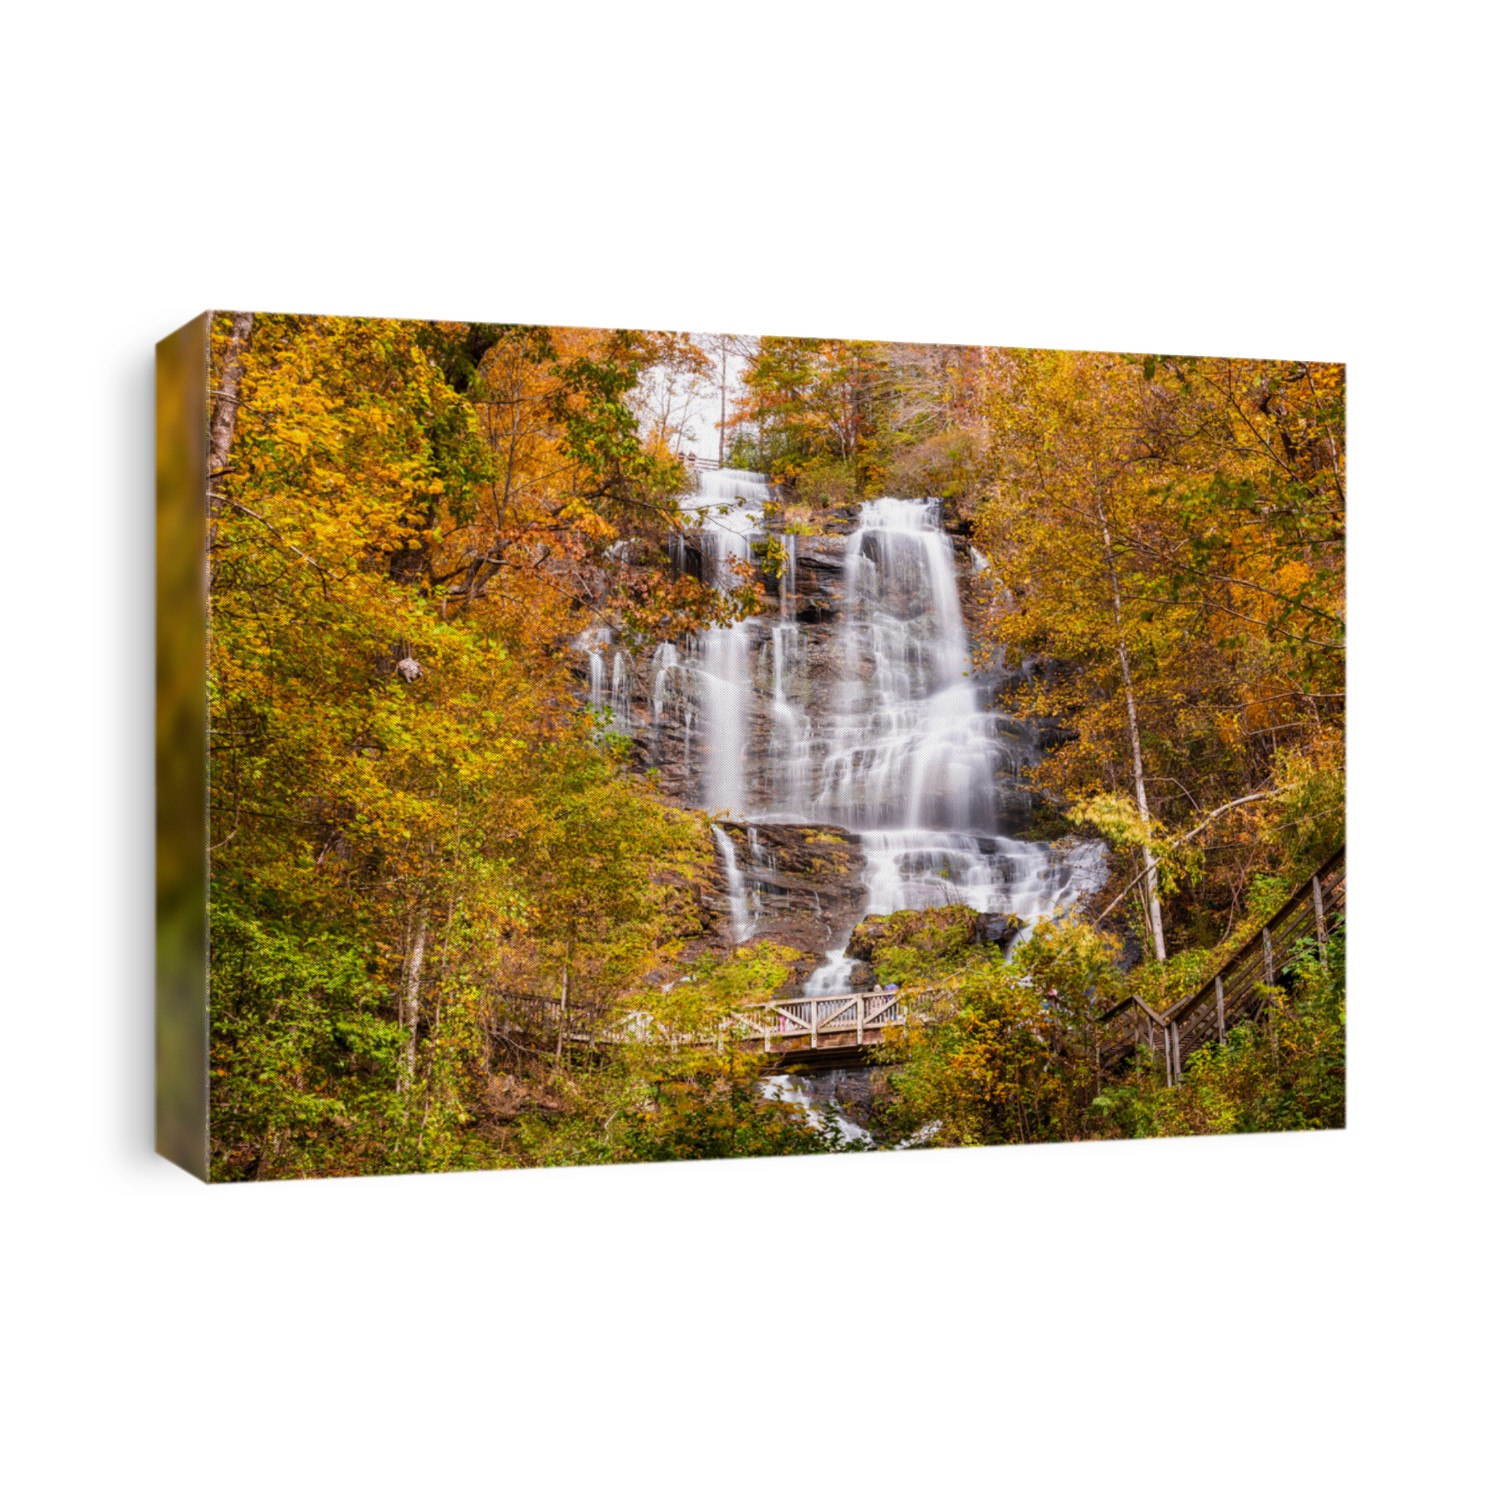 Amicalola Falls, Georgia, USA in autumn season.